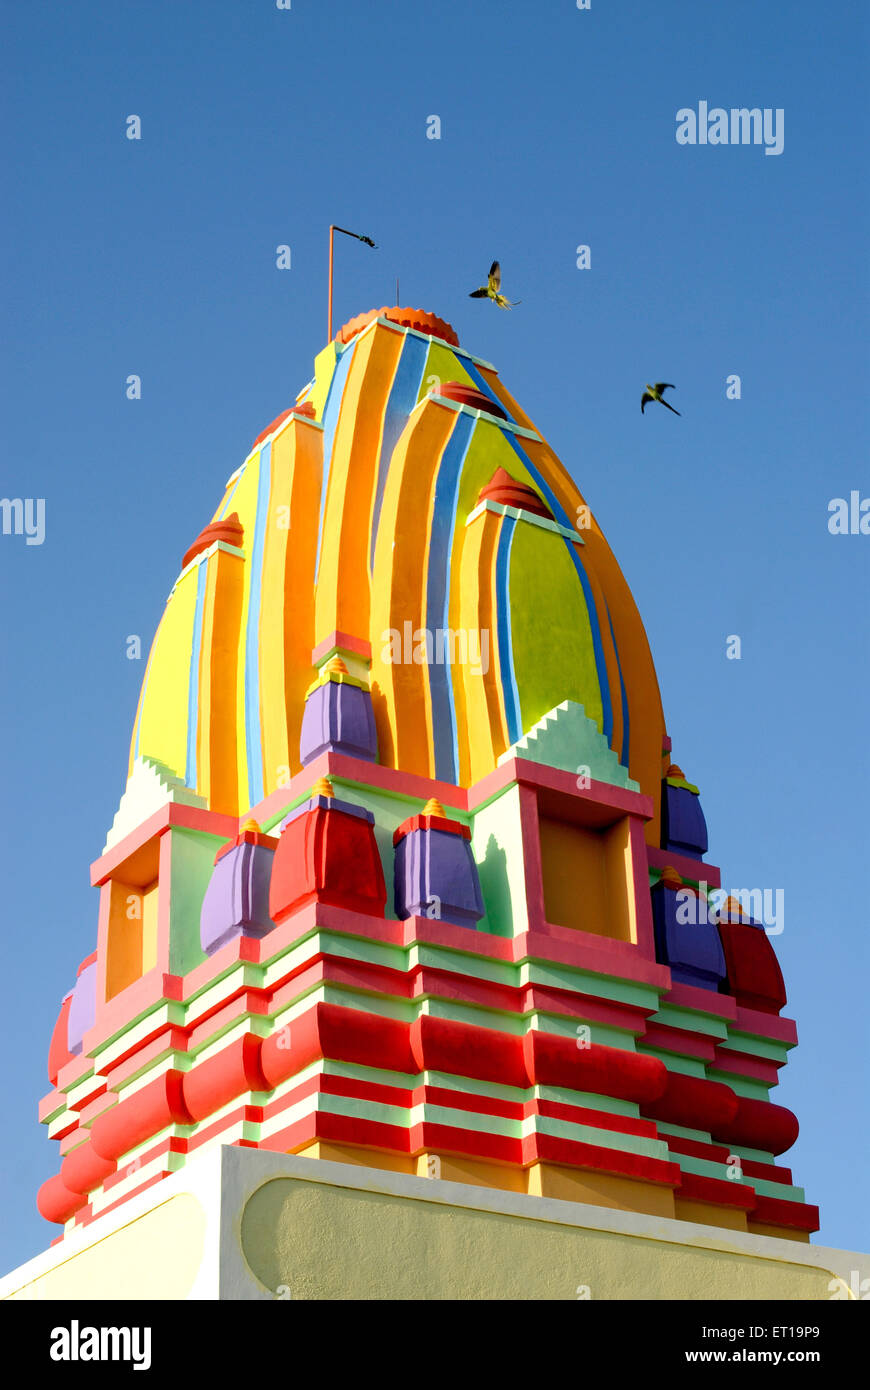 Shiva Tempel, Amreli, Gujarat, Indien Stockfoto